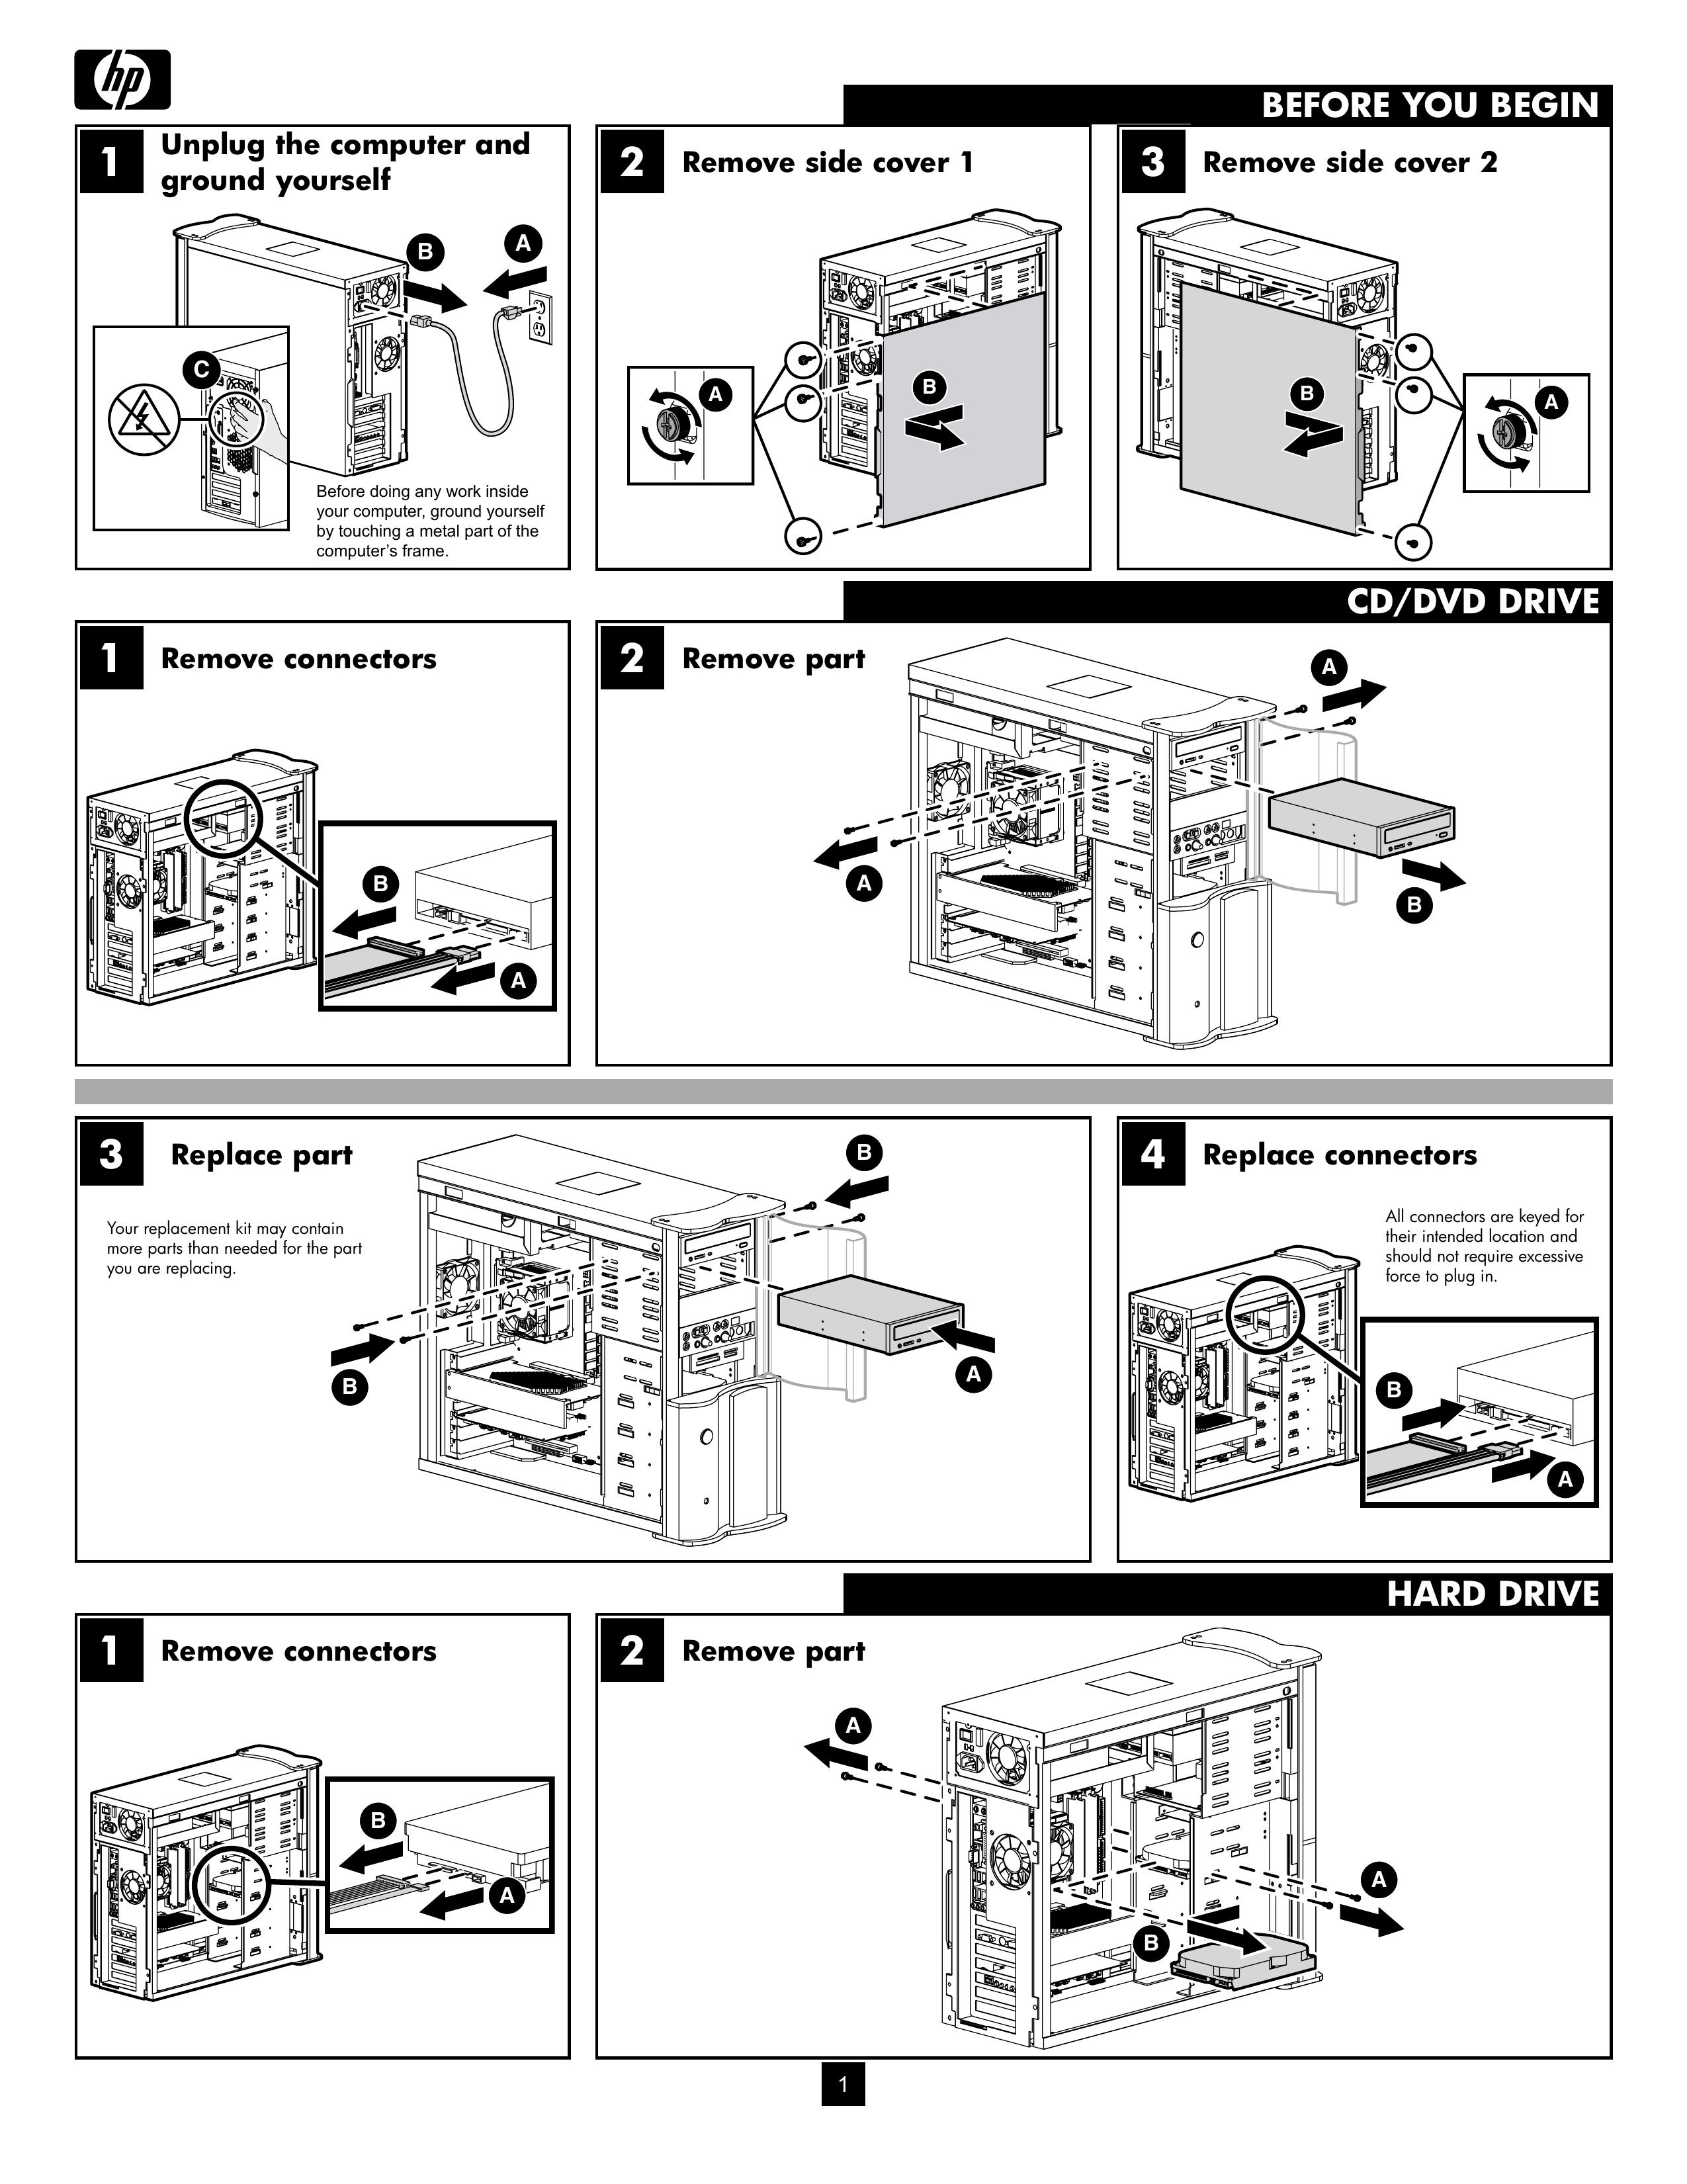 HP (Hewlett-Packard) Hard Drive Camcorder Camcorder User Manual